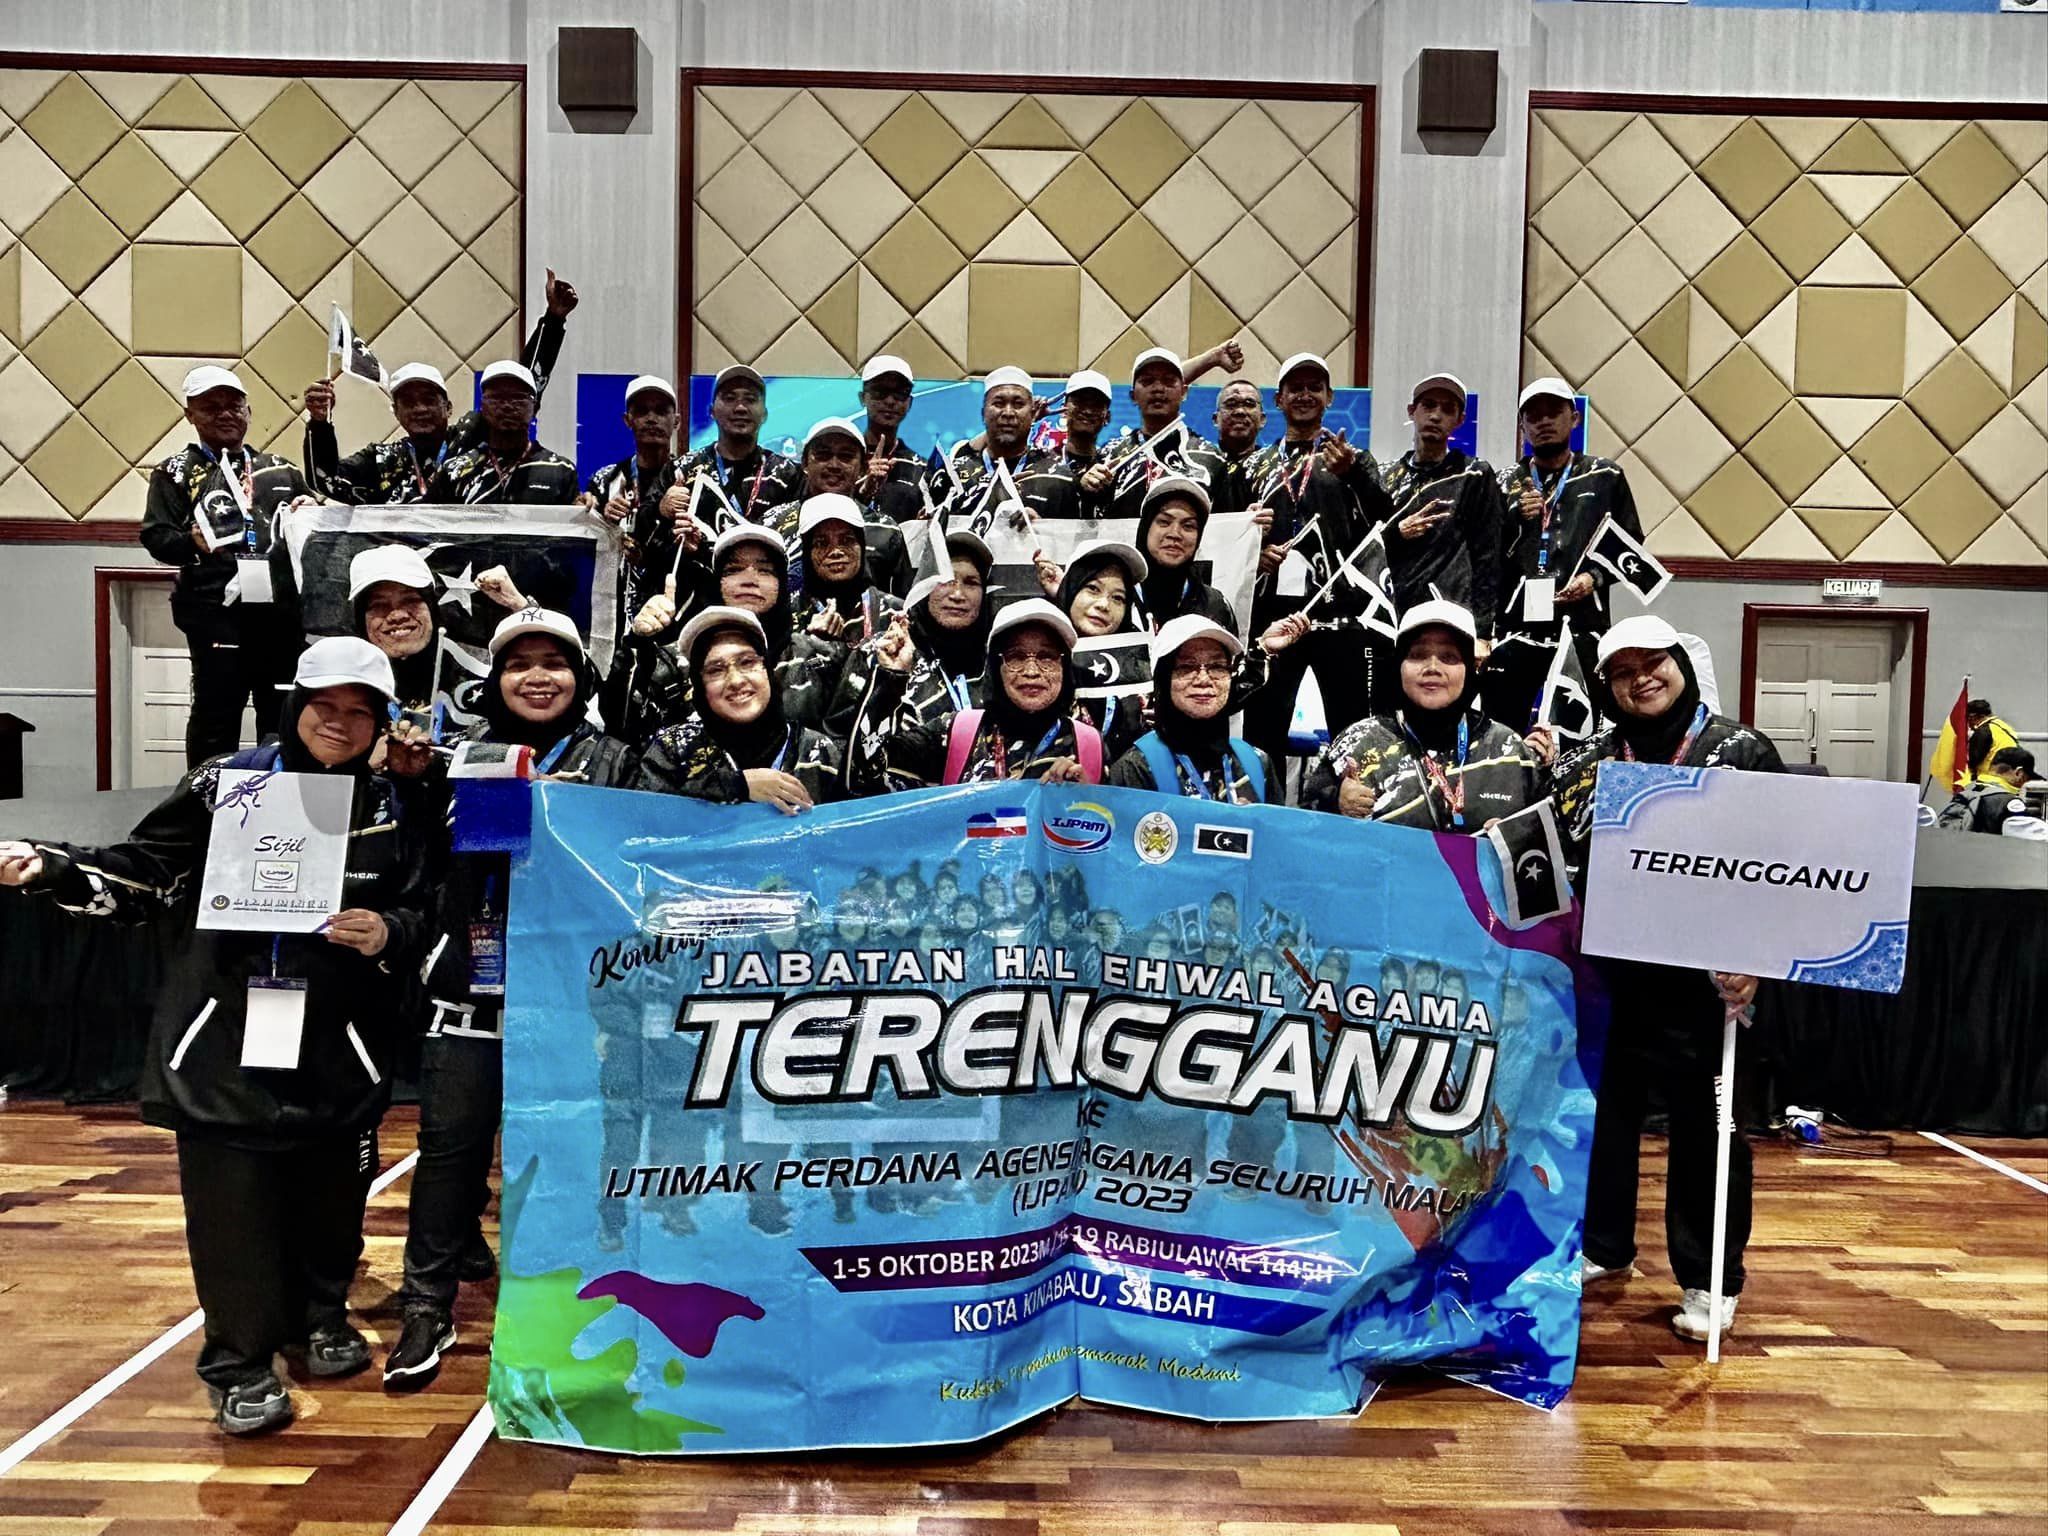 Kejohanan Sukan Sempena Ijtimak Perdana Agensi Agama Seluruh Malaysia 2023 (Ijpam), Kota Kinabalu,Sabah